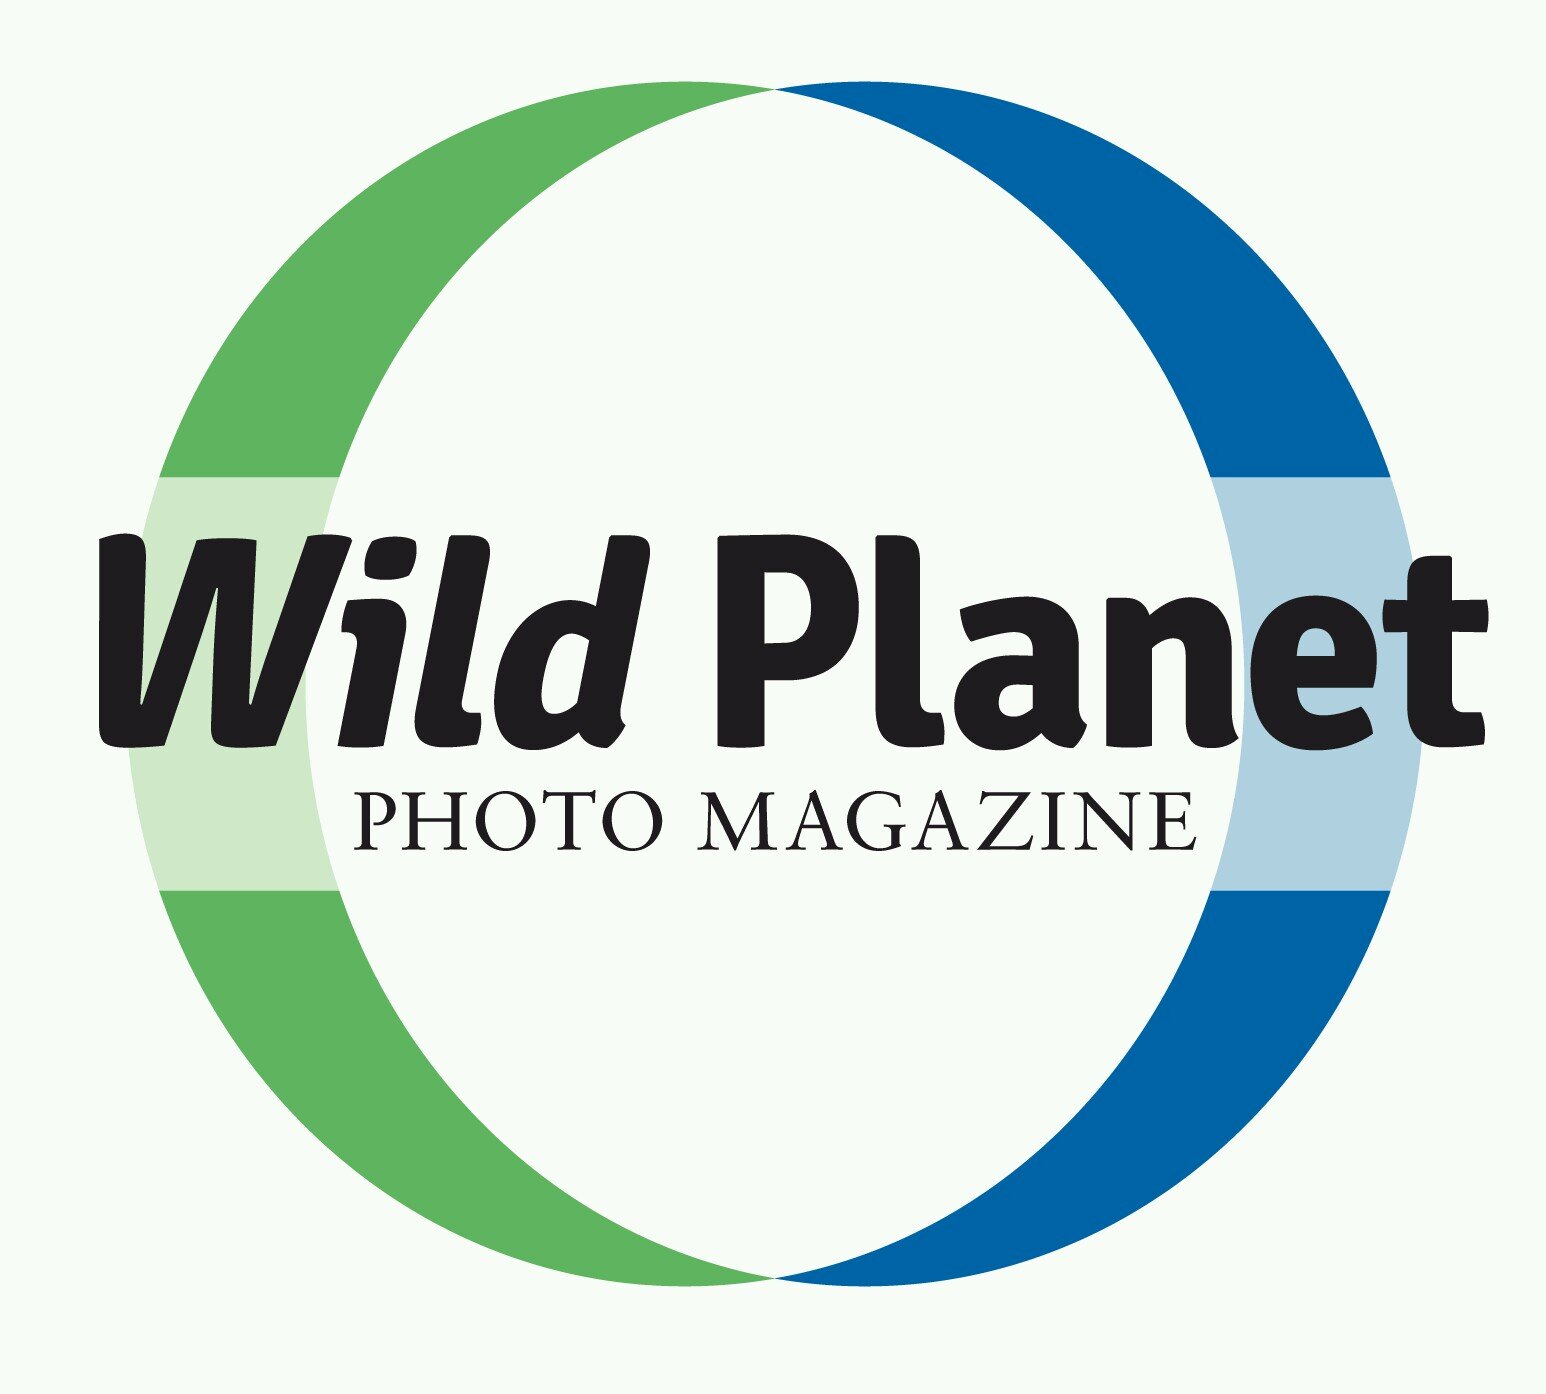 Wild planet photo mag logo new